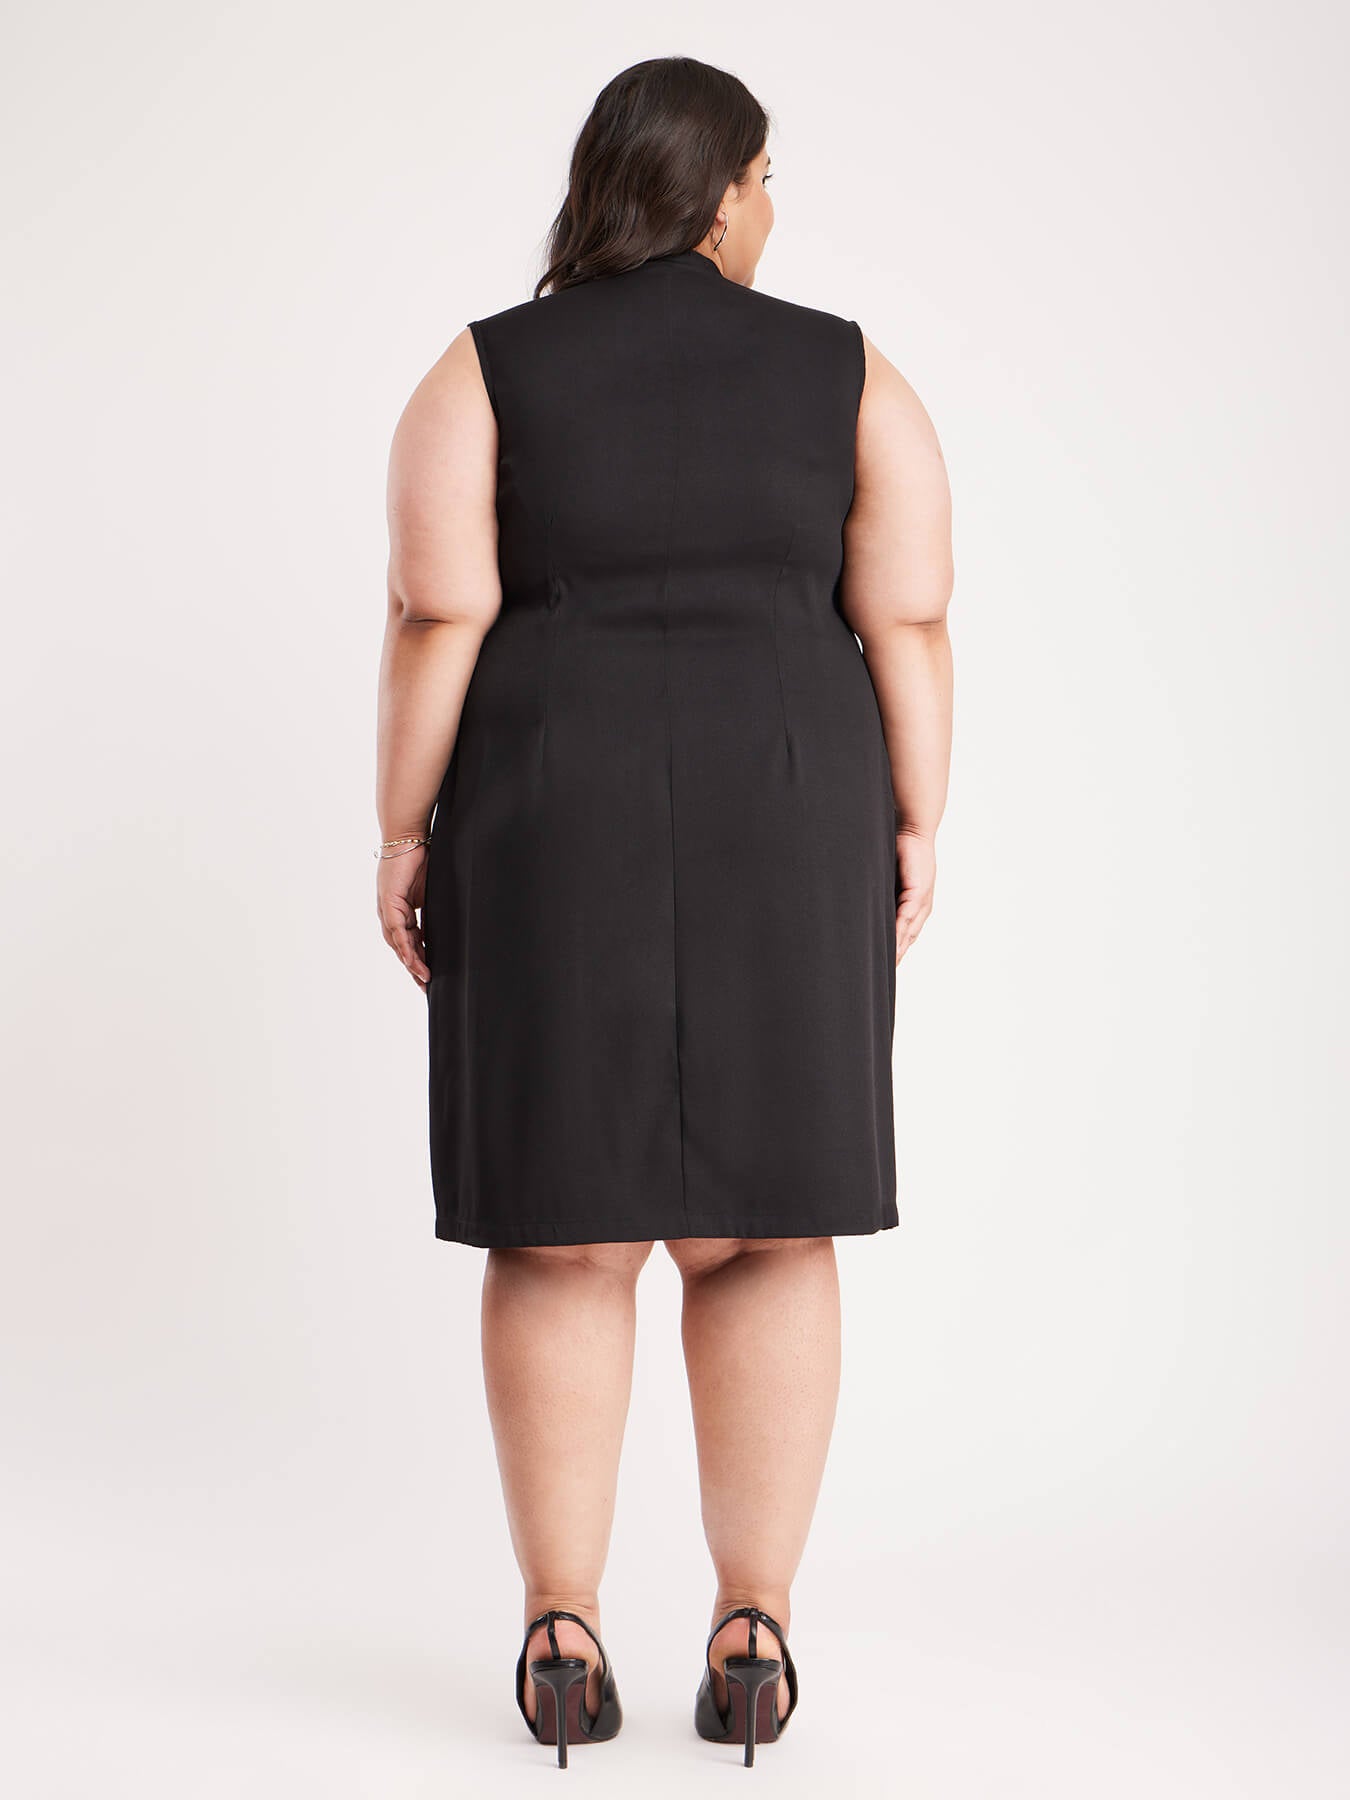 Mandarin Collar Sleeveless Dress - Black